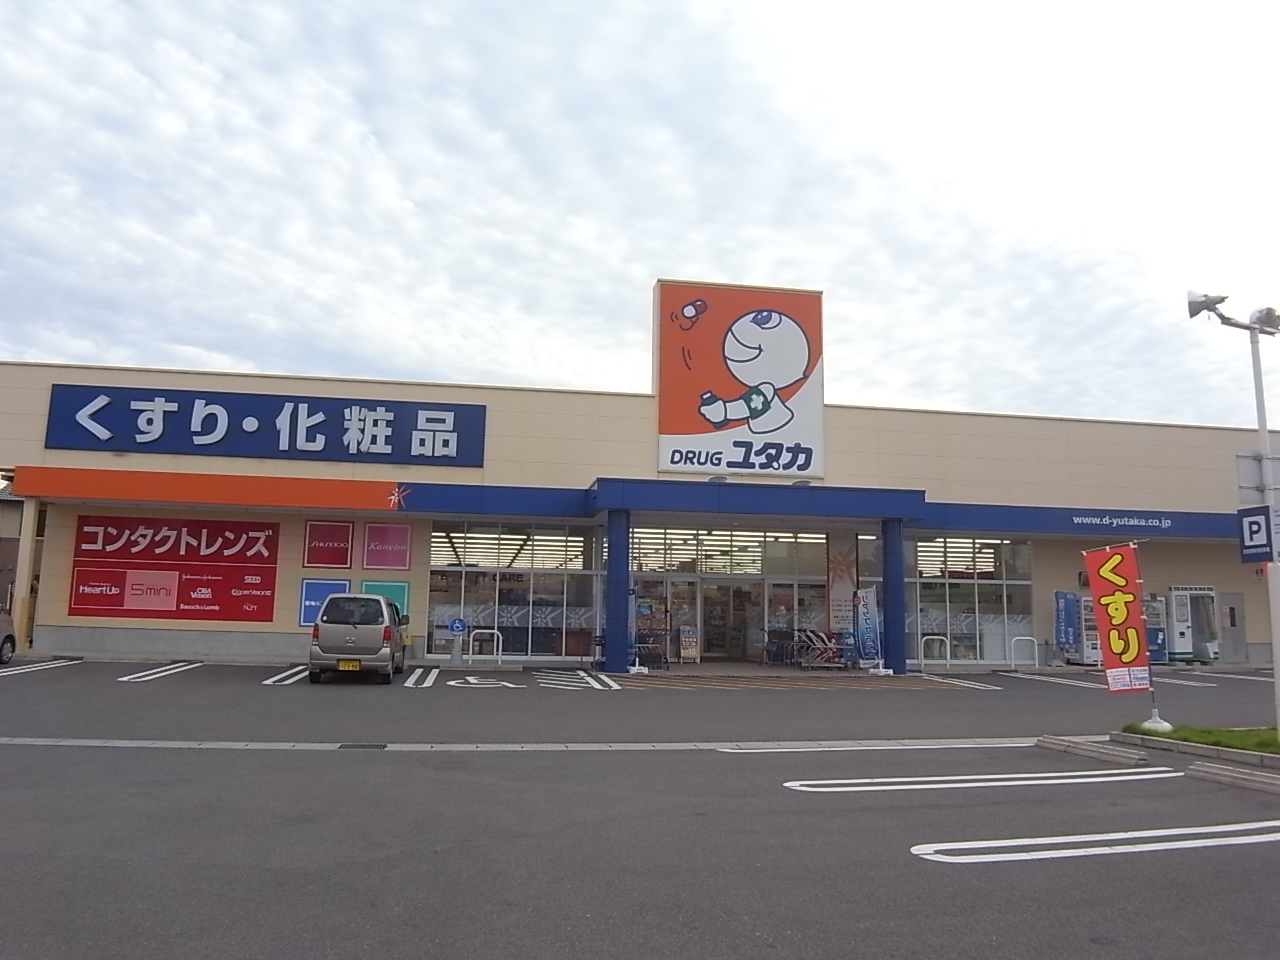 Dorakkusutoa. Drag Yutaka Kido shop 423m until (drugstore)